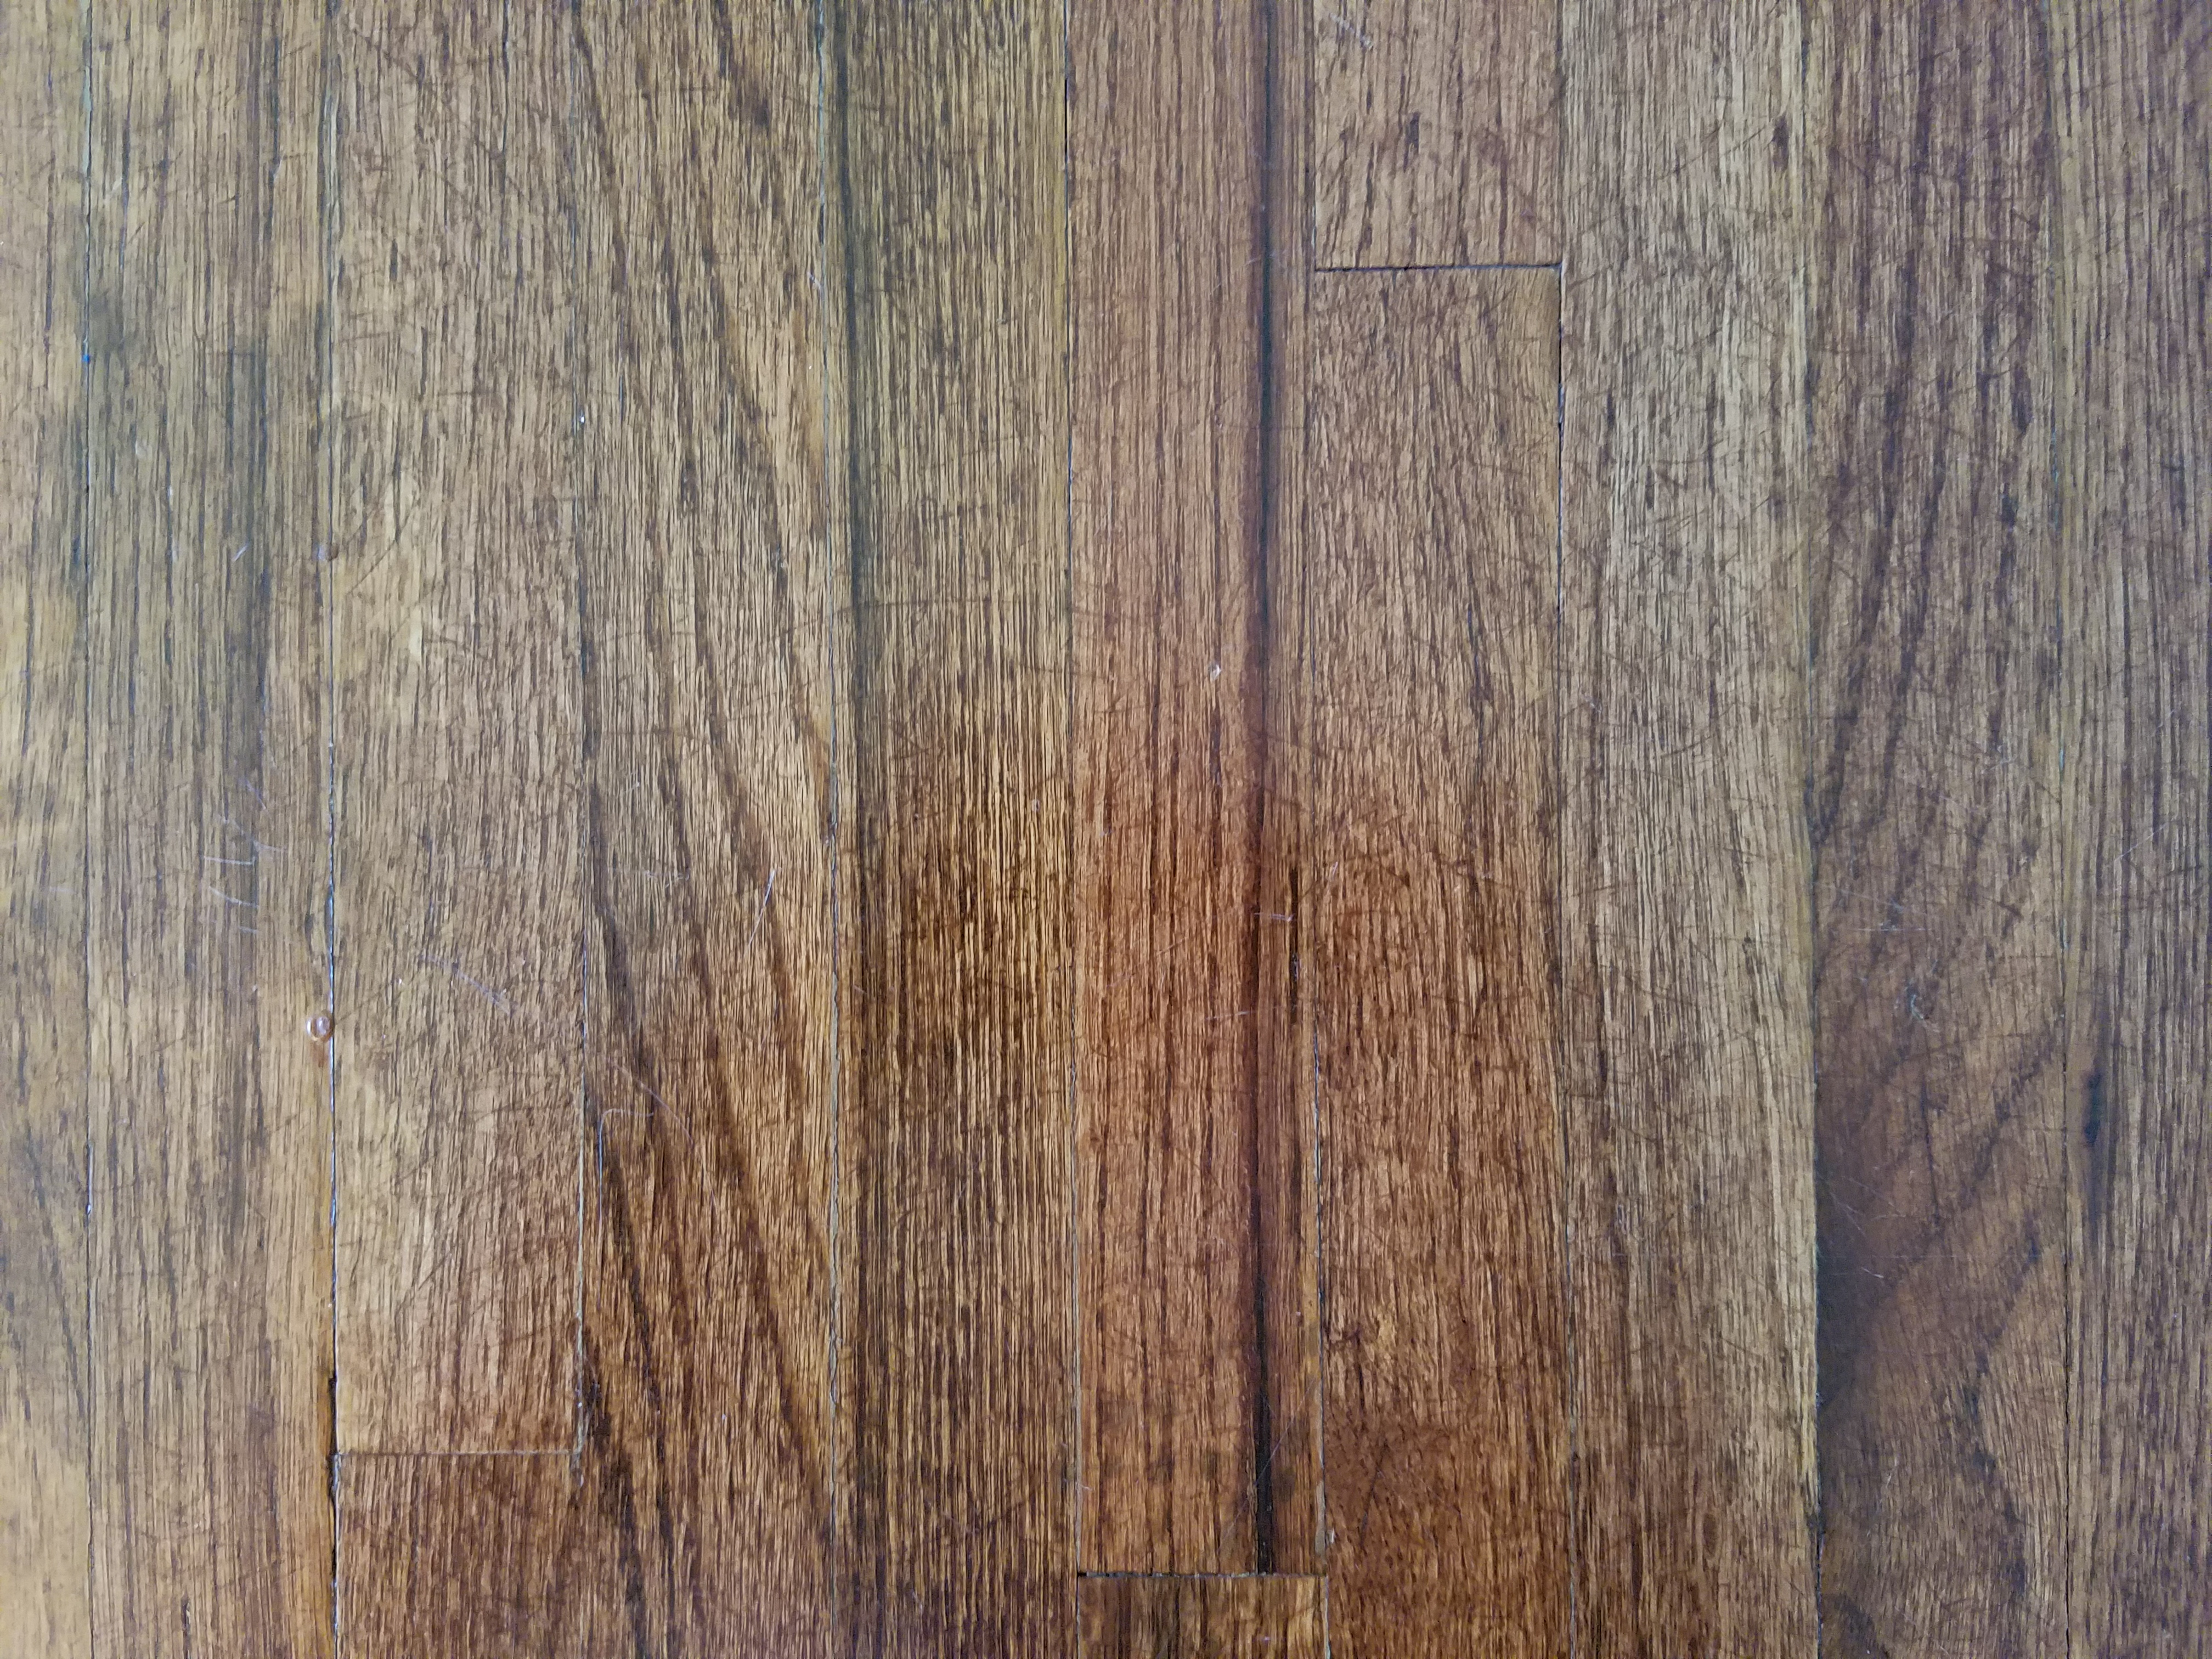 hardwood-floor-background-075.jpg